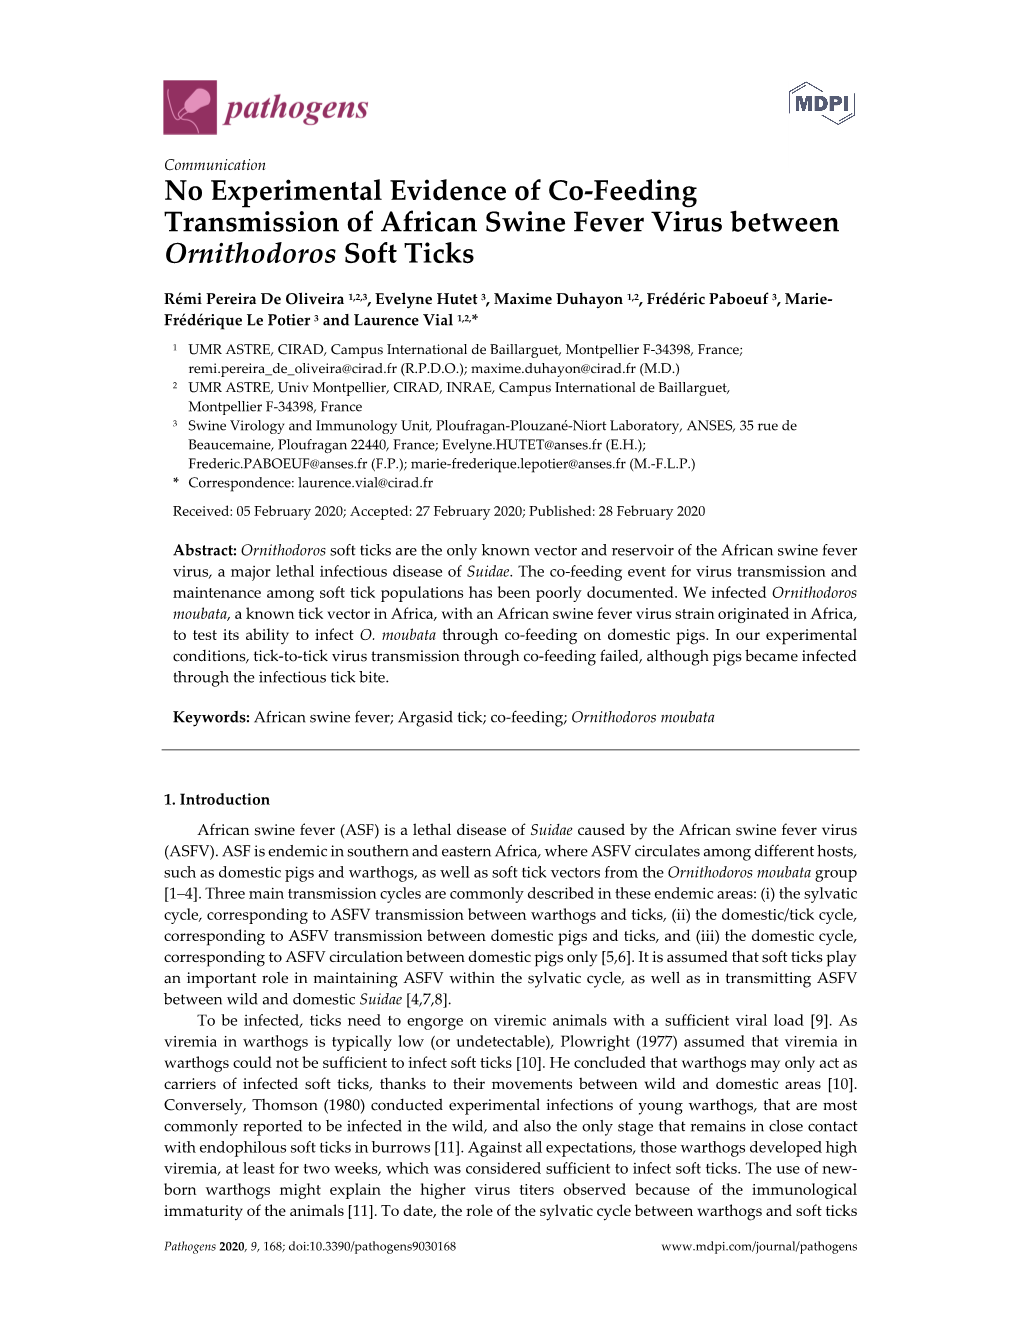 No Experimental Evidence of Co-Feeding Transmission of African Swine Fever Virus Between Ornithodoros Soft Ticks